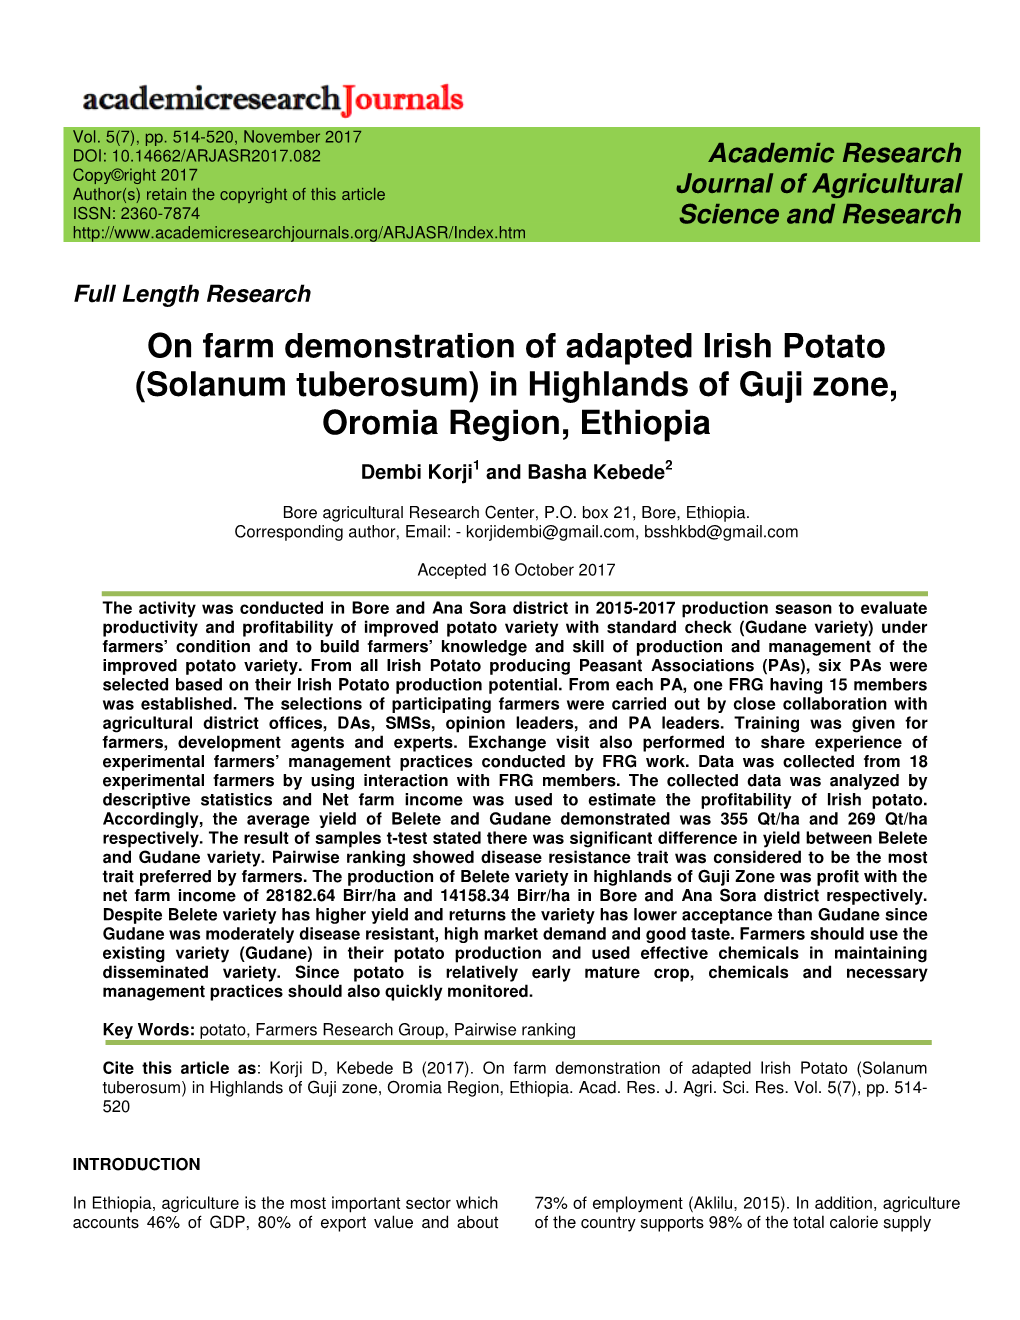 On Farm Demonstration of Adapted Irish Potato (Solanum Tuberosum) in Highlands of Guji Zone, Oromia Region, Ethiopia